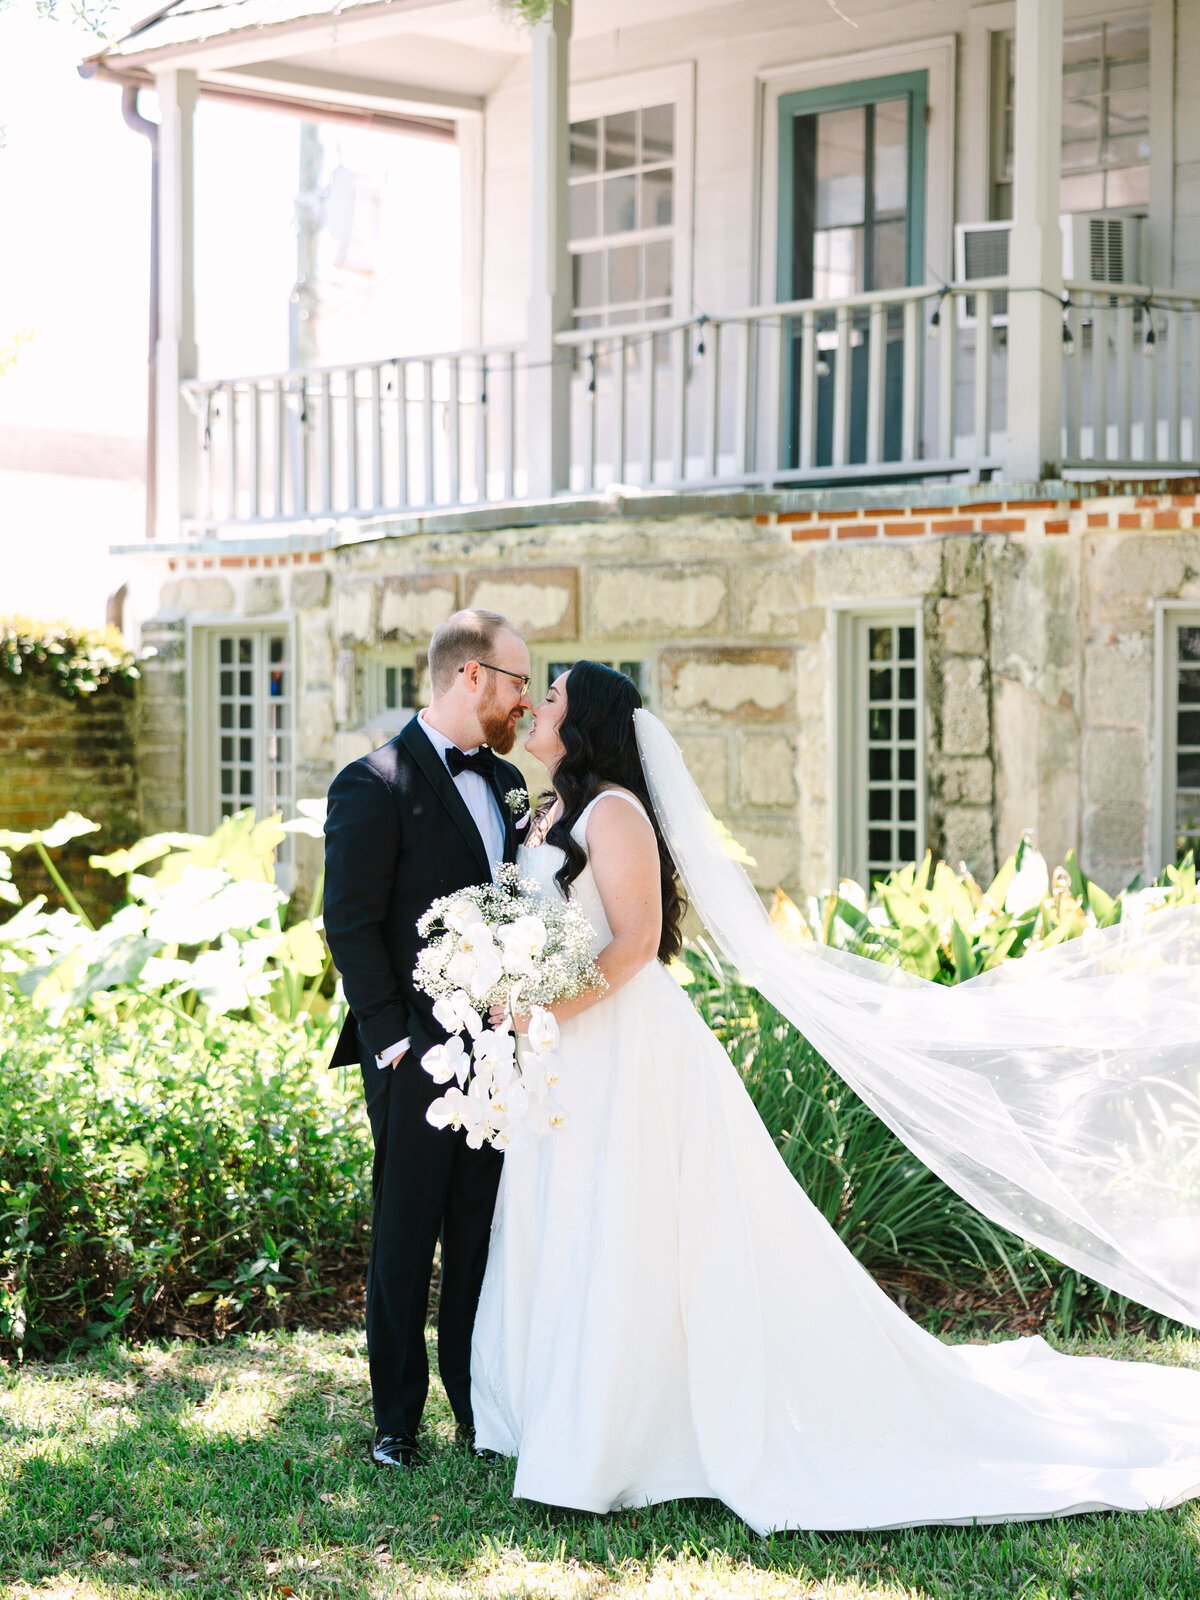 LAURA PEREZ PHOTOGRAPHY LLC Alejandra & michael Oldest house and 9 aviles st augustine weddings-22